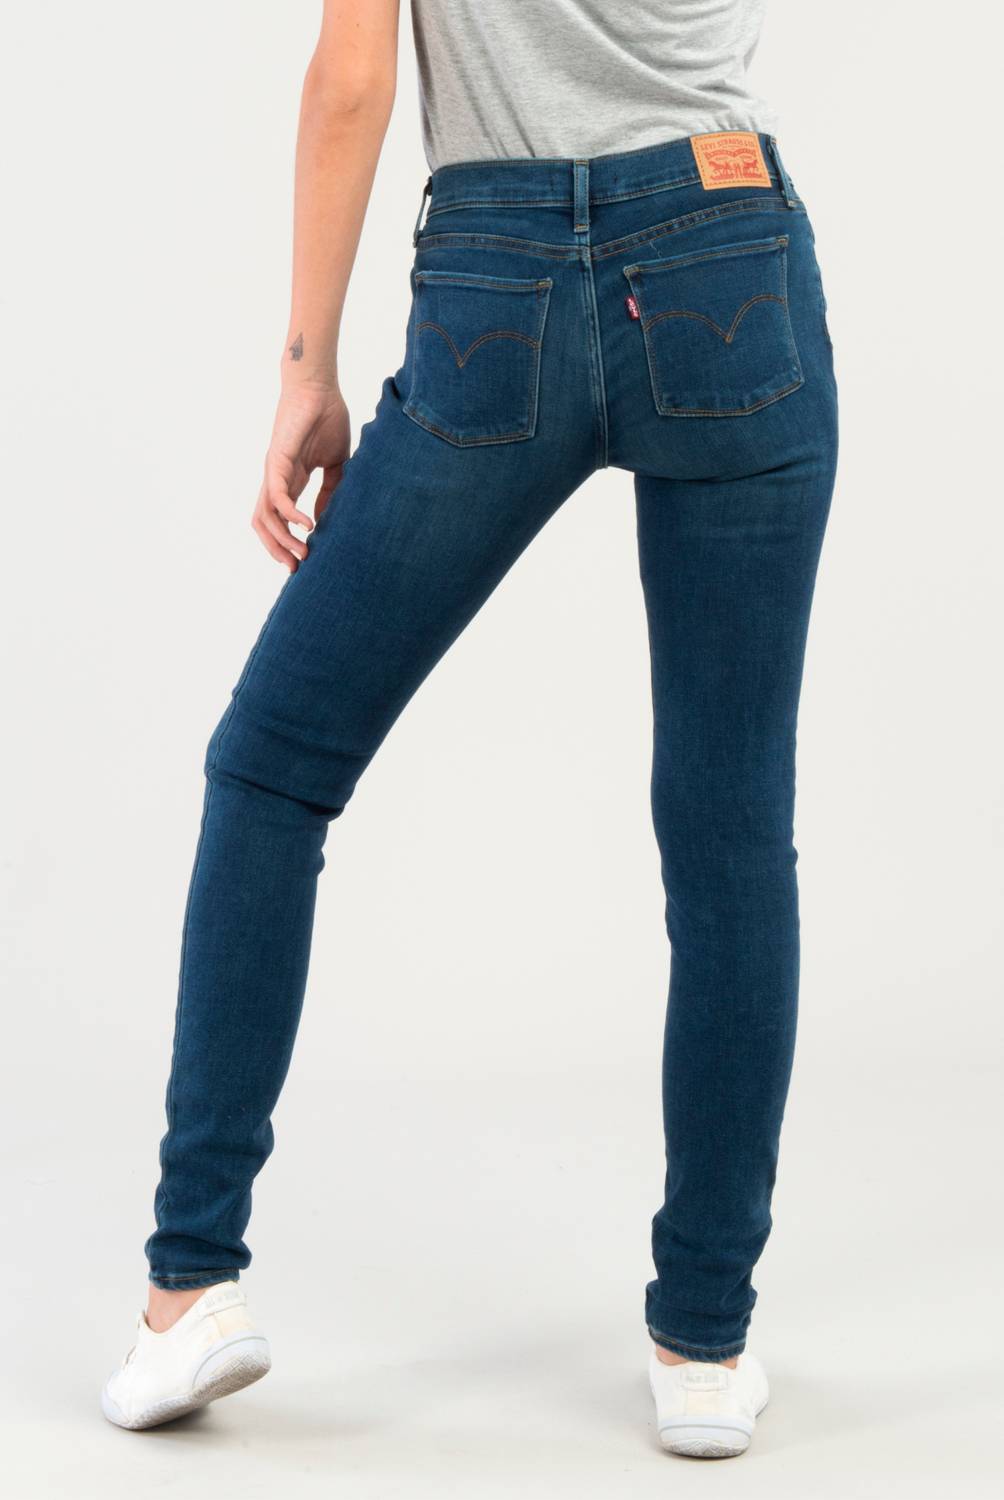 LEVIS - Jeans Skinny Tiro Alto Mujer